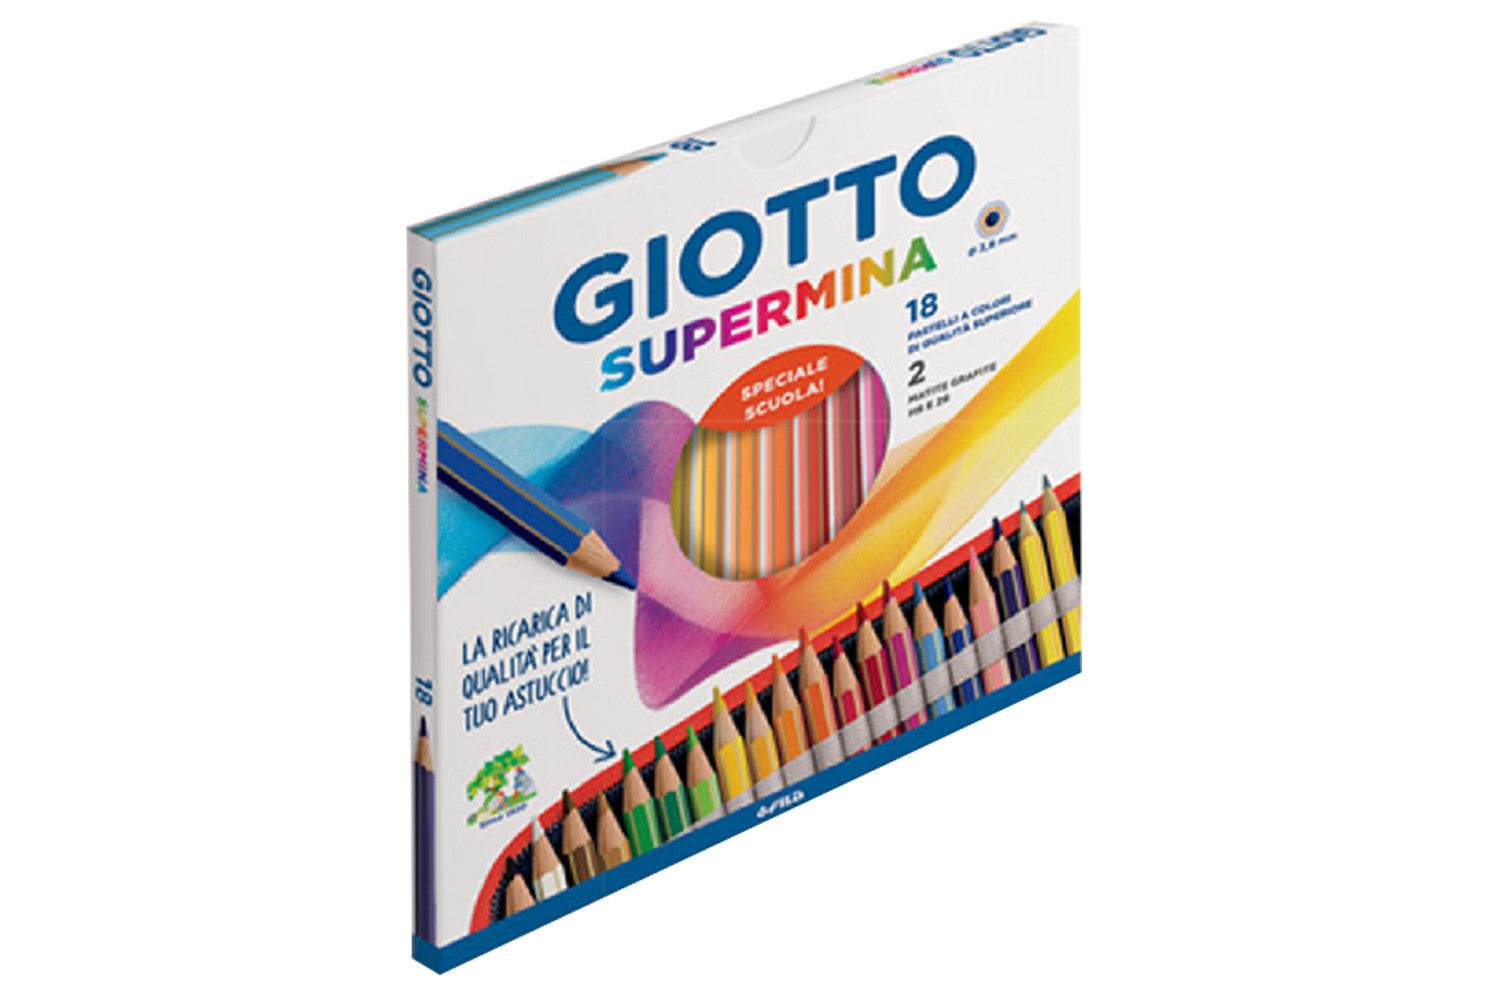 Giotto supermina 36 pastelli vari colori